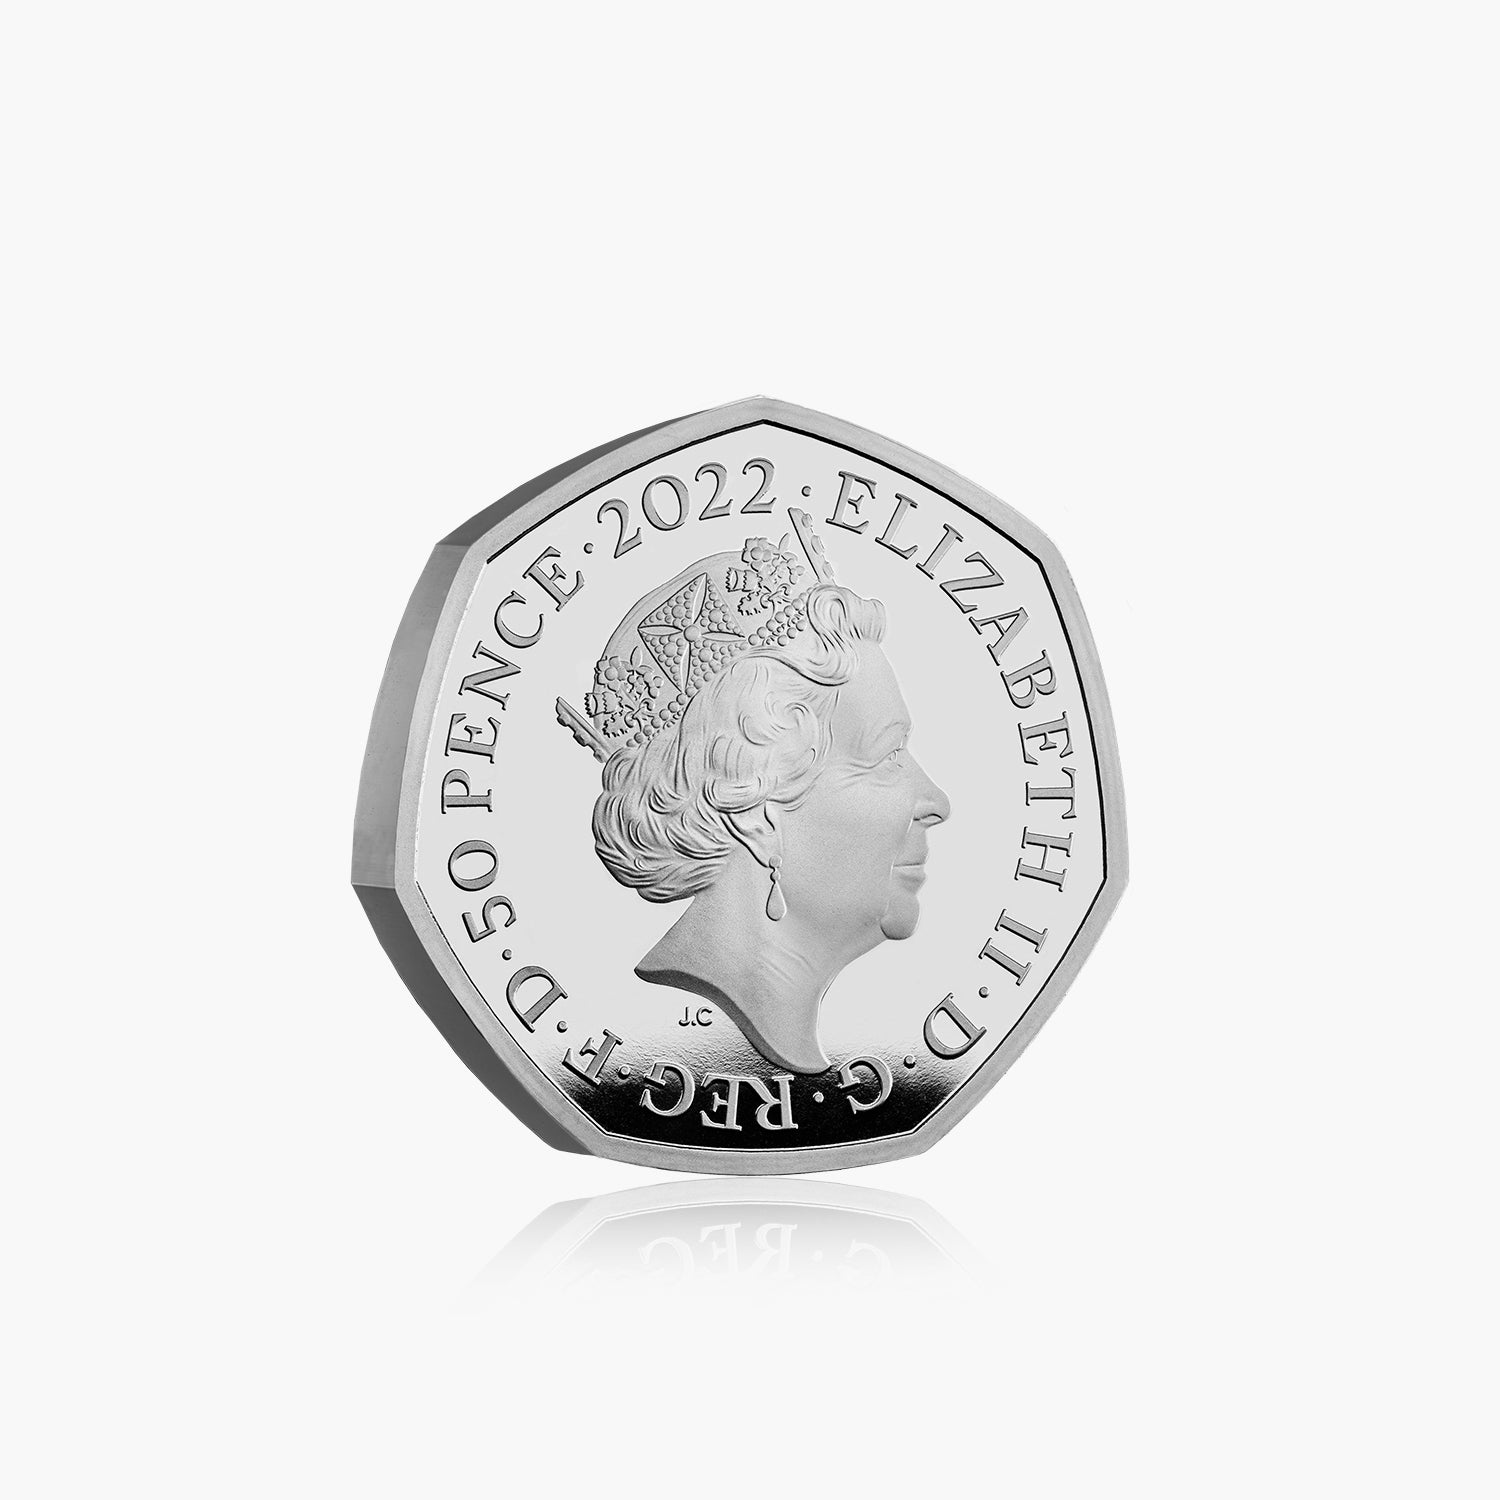 Birmingham 2022 Commonwealth Games UK 50p Silver Proof Piedfort Colour Coin